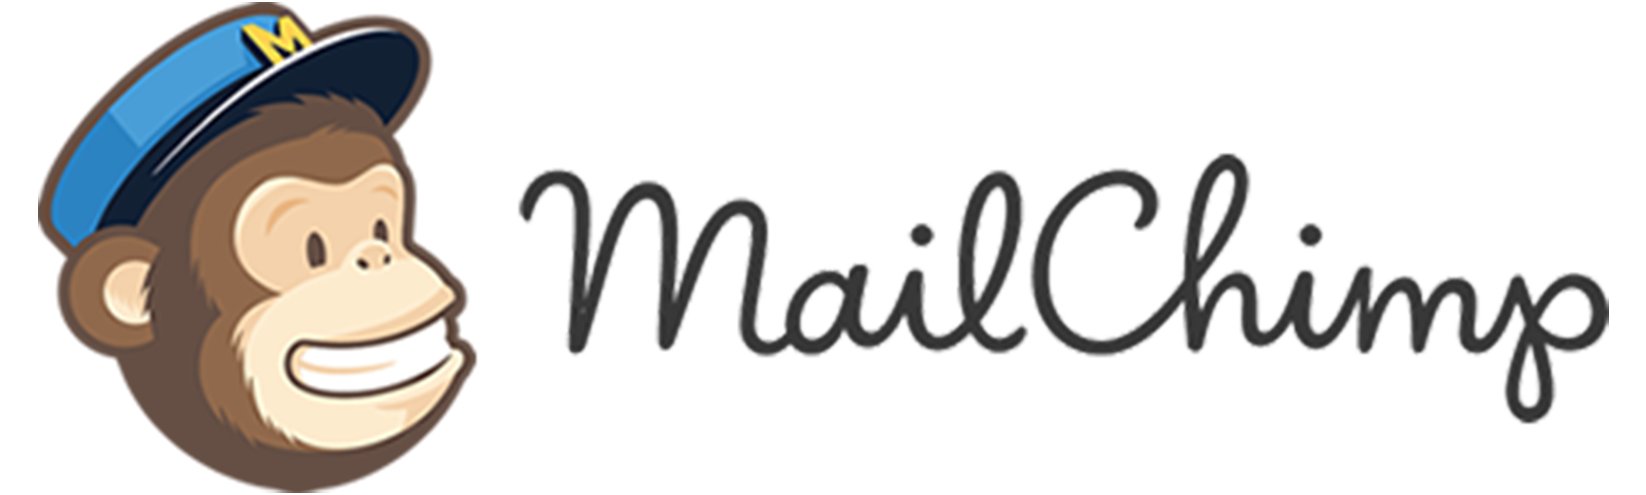 MailChimp Email Marketing Ser